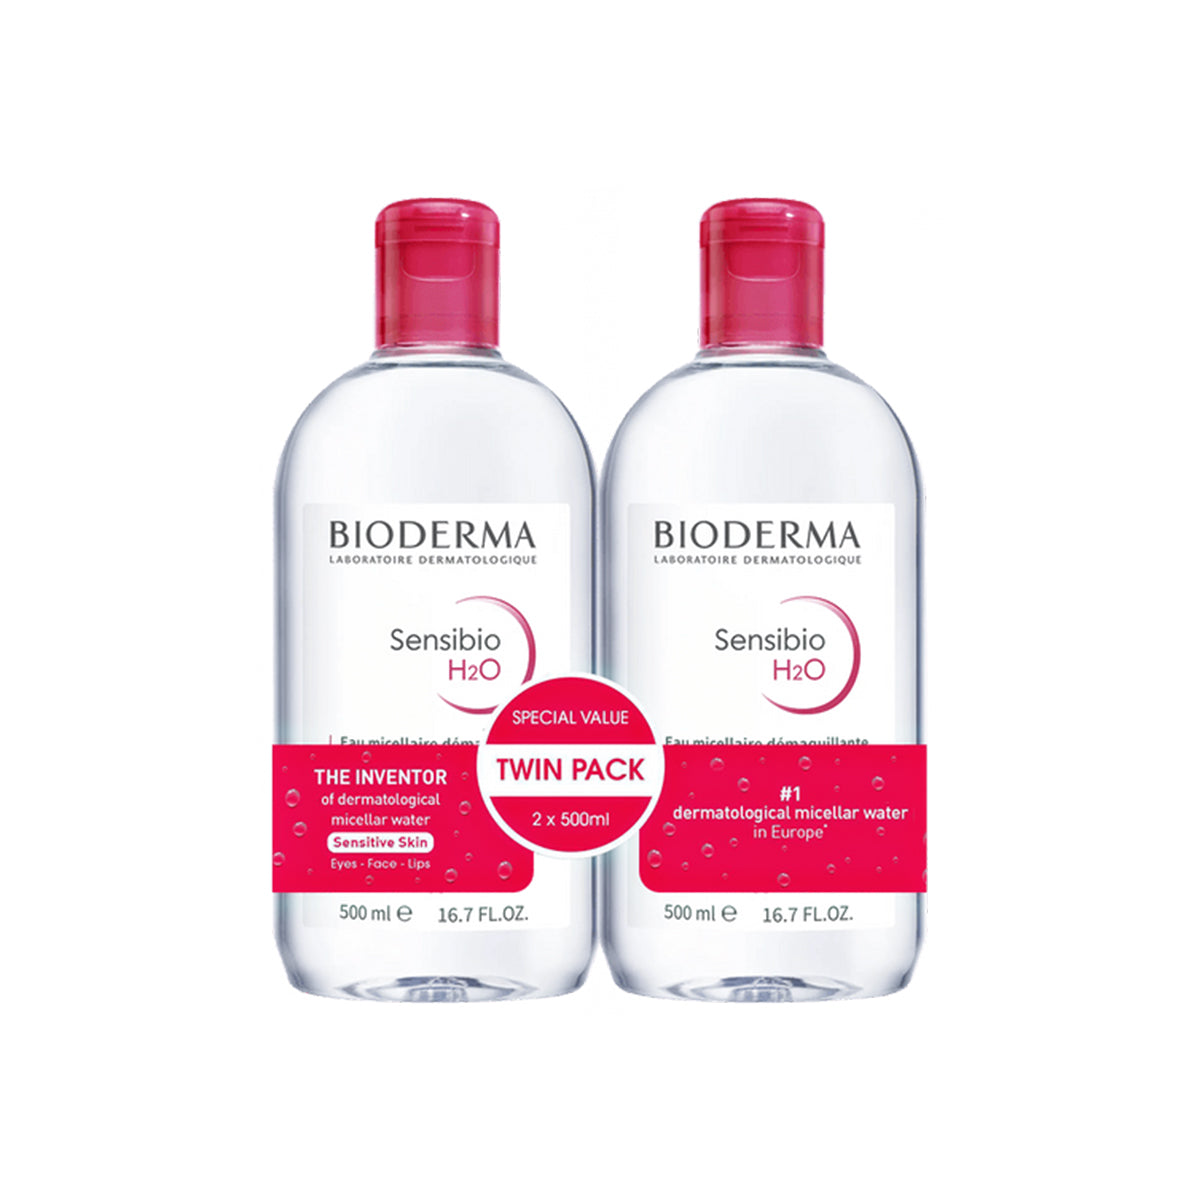 Bioderma Duo Sensibio H2O 2 X 16.7 Fl.Oz. Makeup Remover Cleanser - Face Cleanser For Sensitive Skin